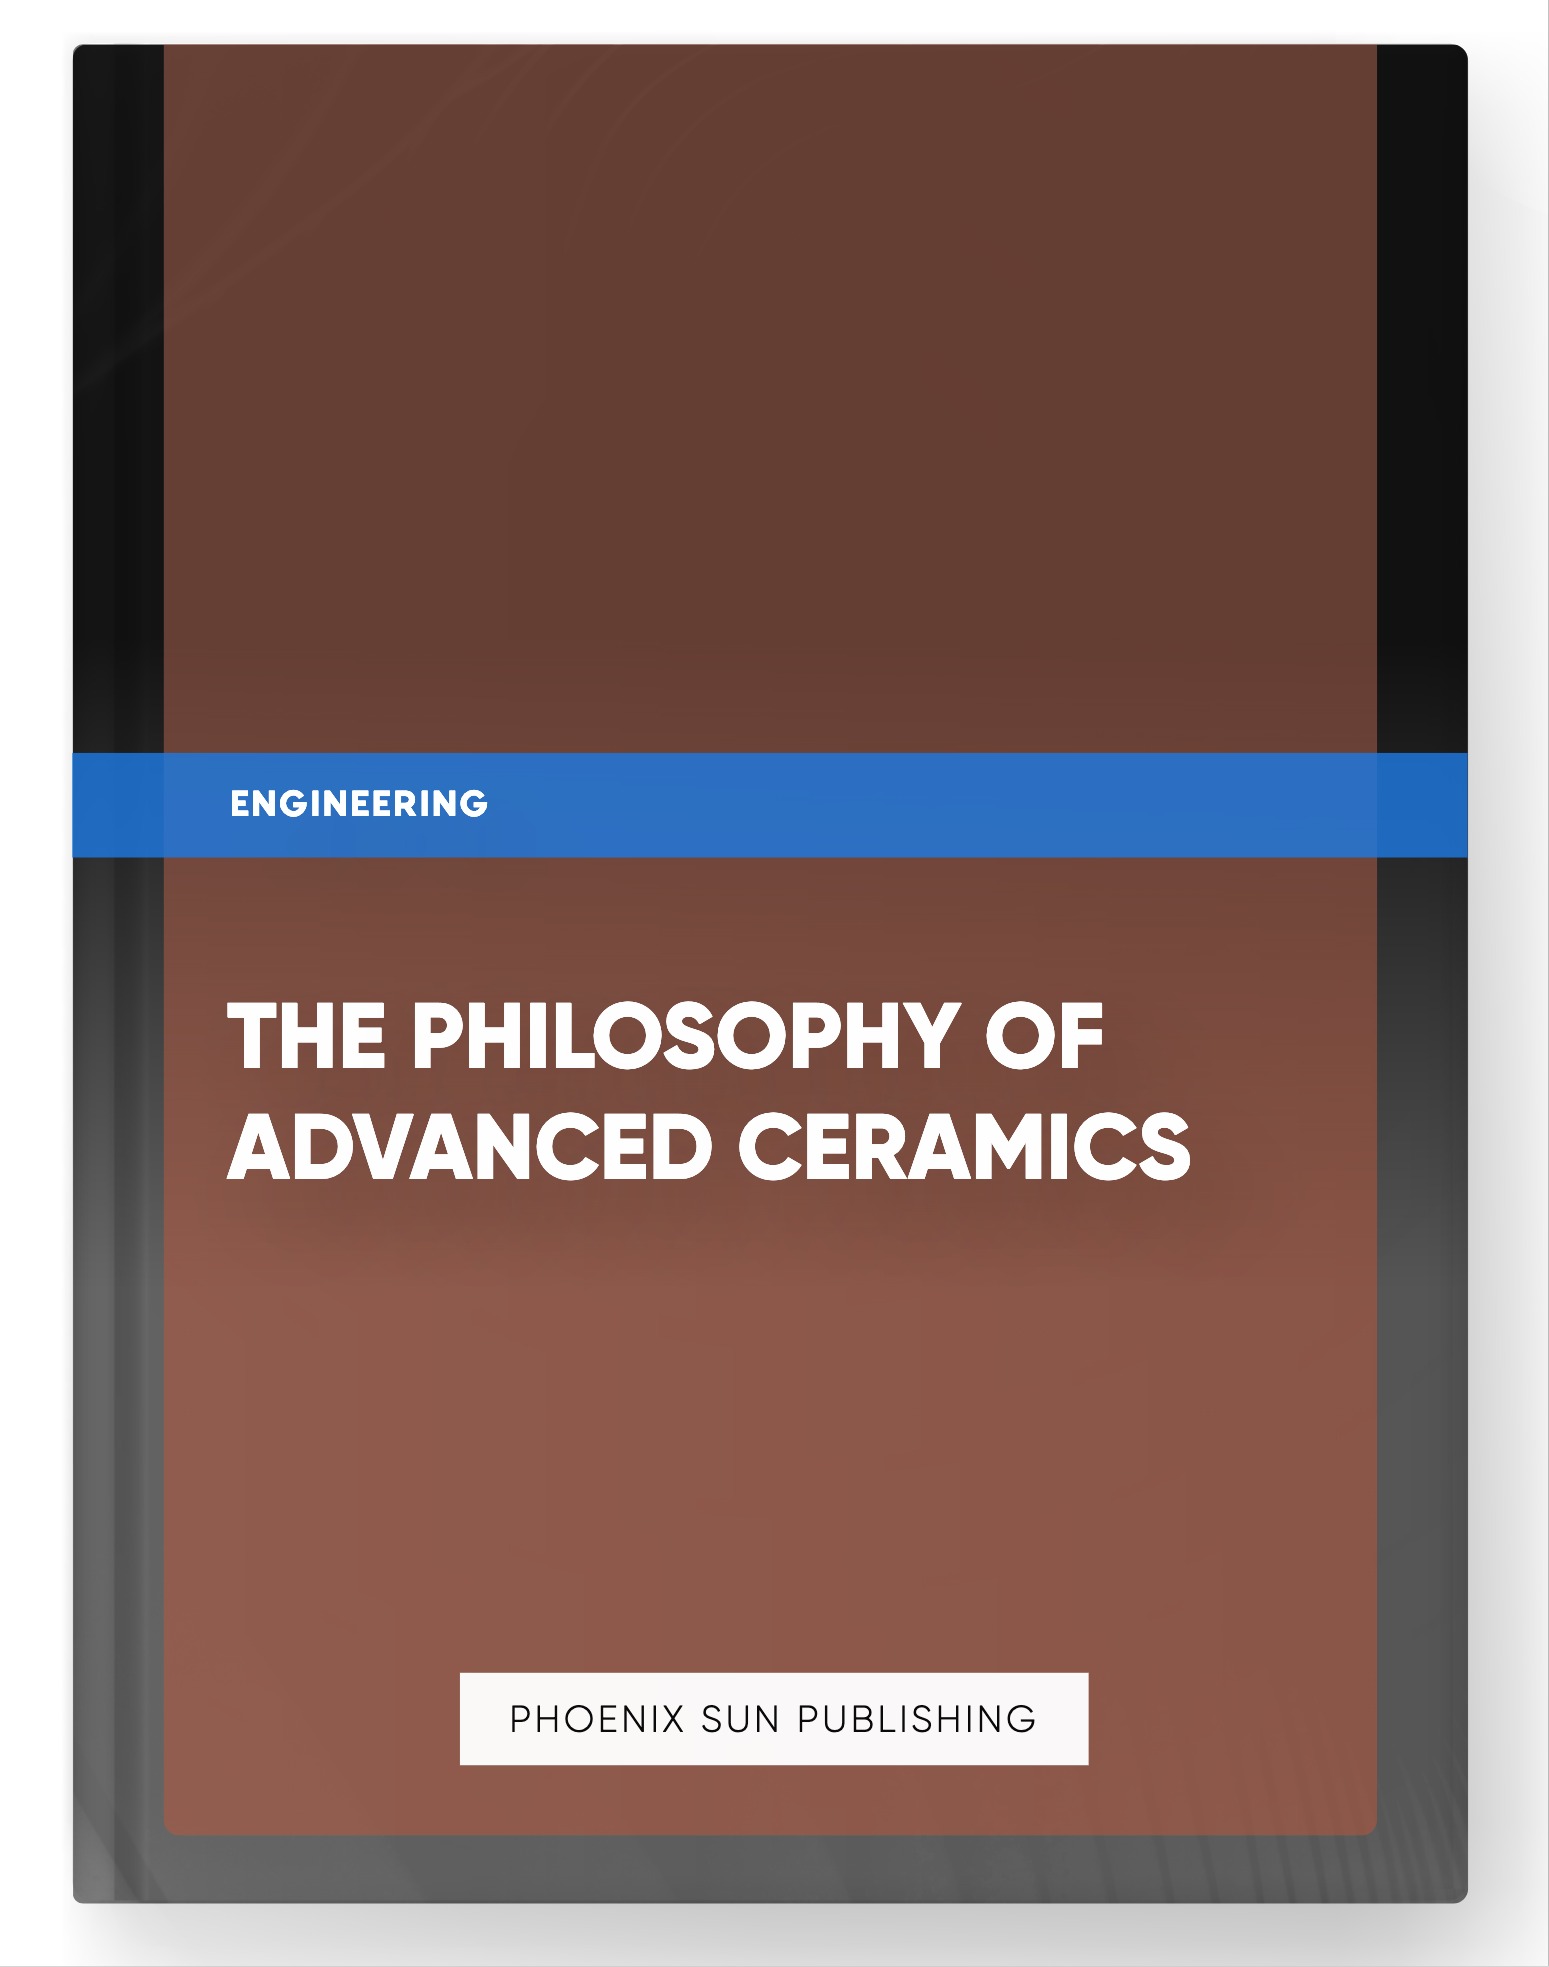 The Philosophy of Advanced Ceramics